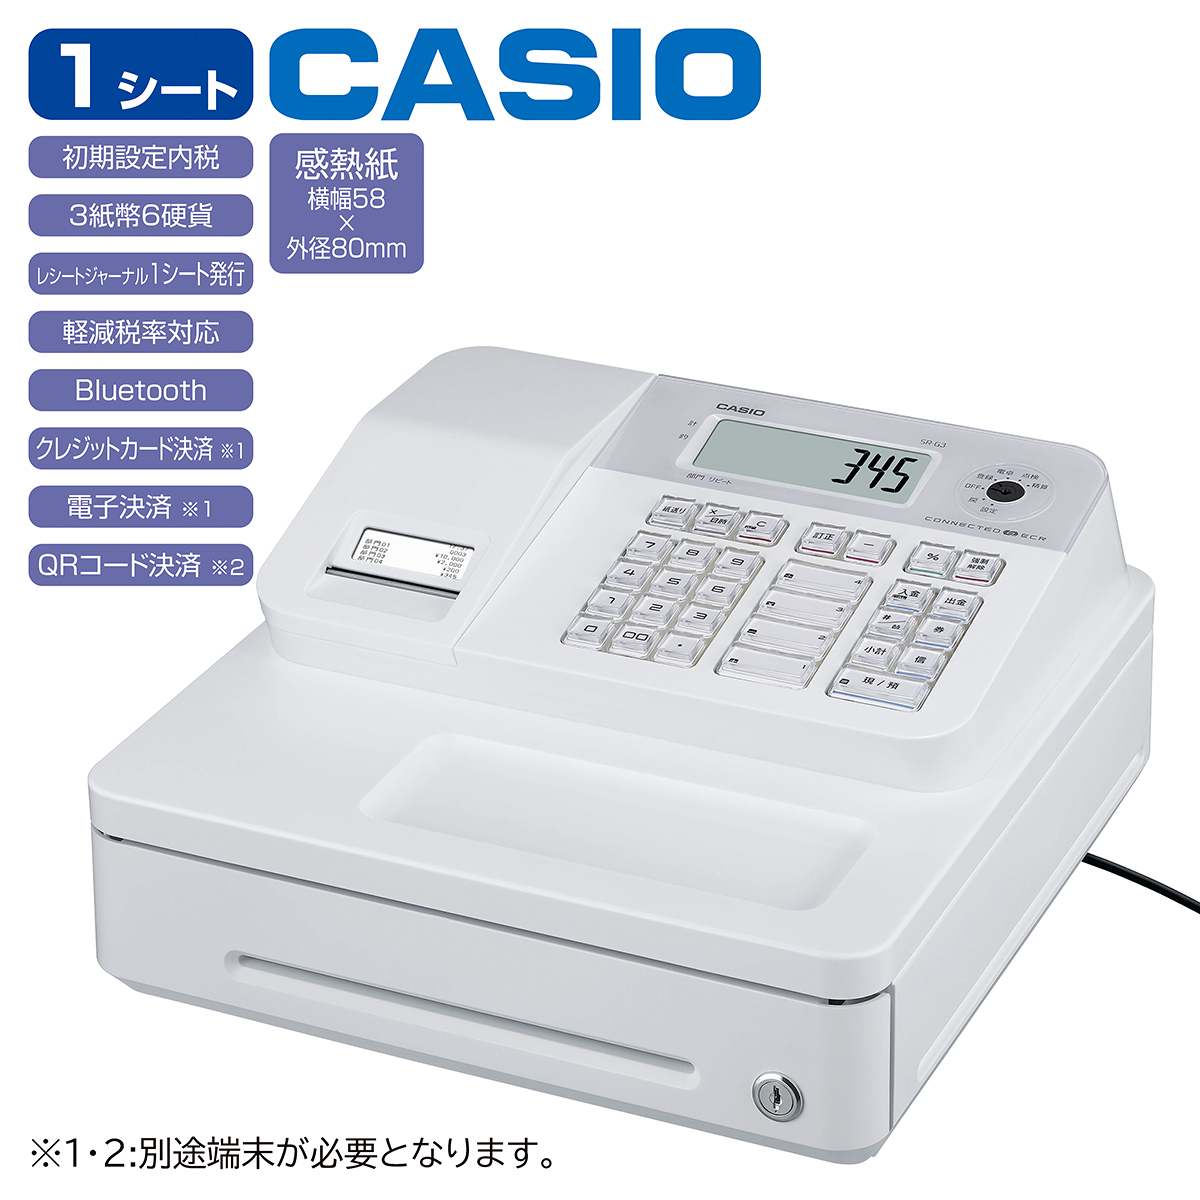 CASIO 電子レジスター 4部門 1シート Bluetooth対応 SR-G3-EX ホワイト (インボイス対応モデル) - 2